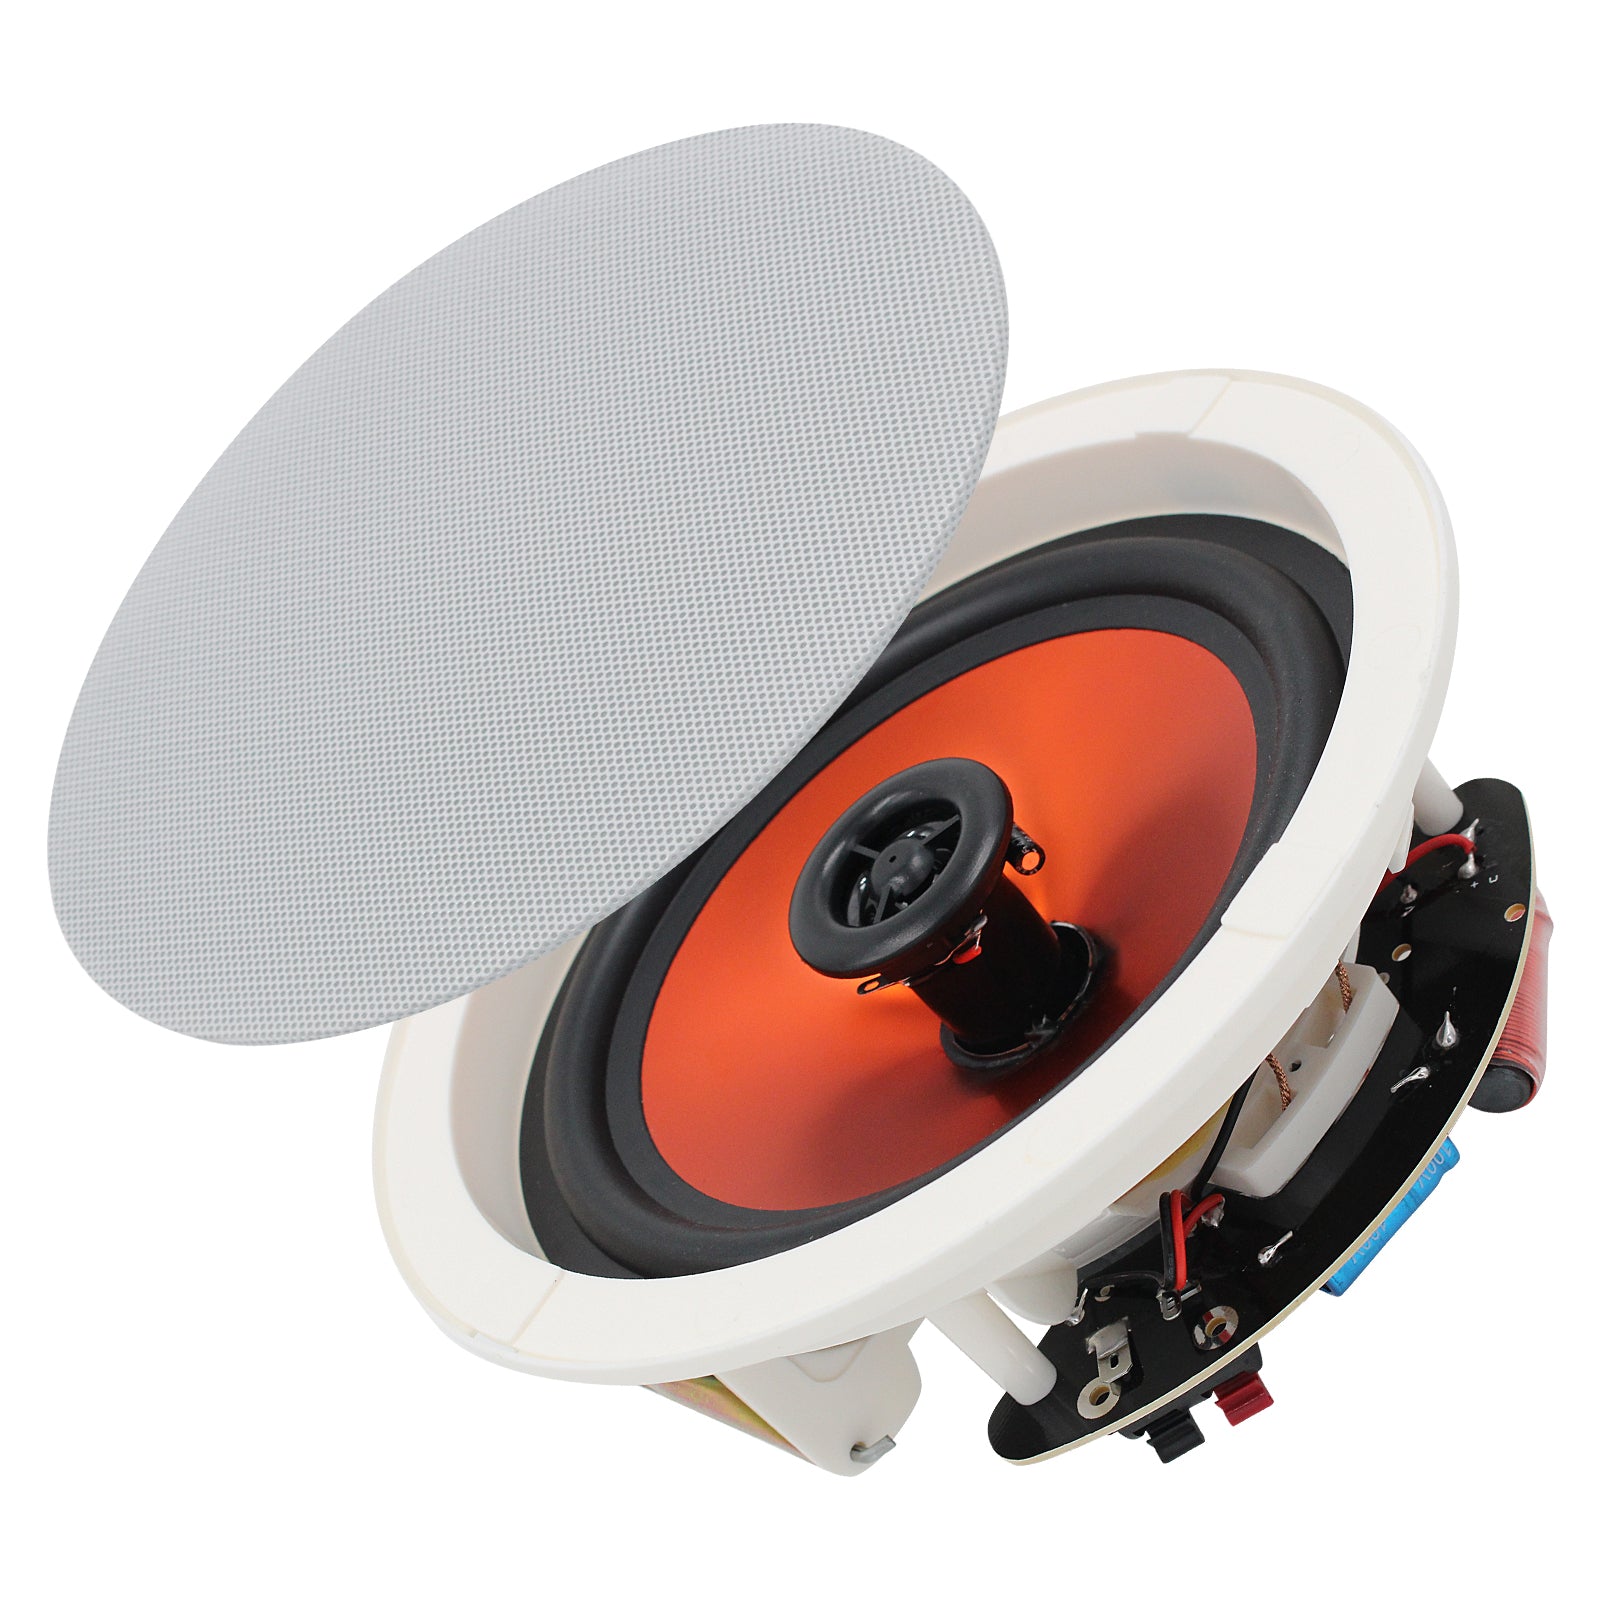 Herdio 6.5 Bluetooth Ceiling Speakers 300 Watts HCS-628BT